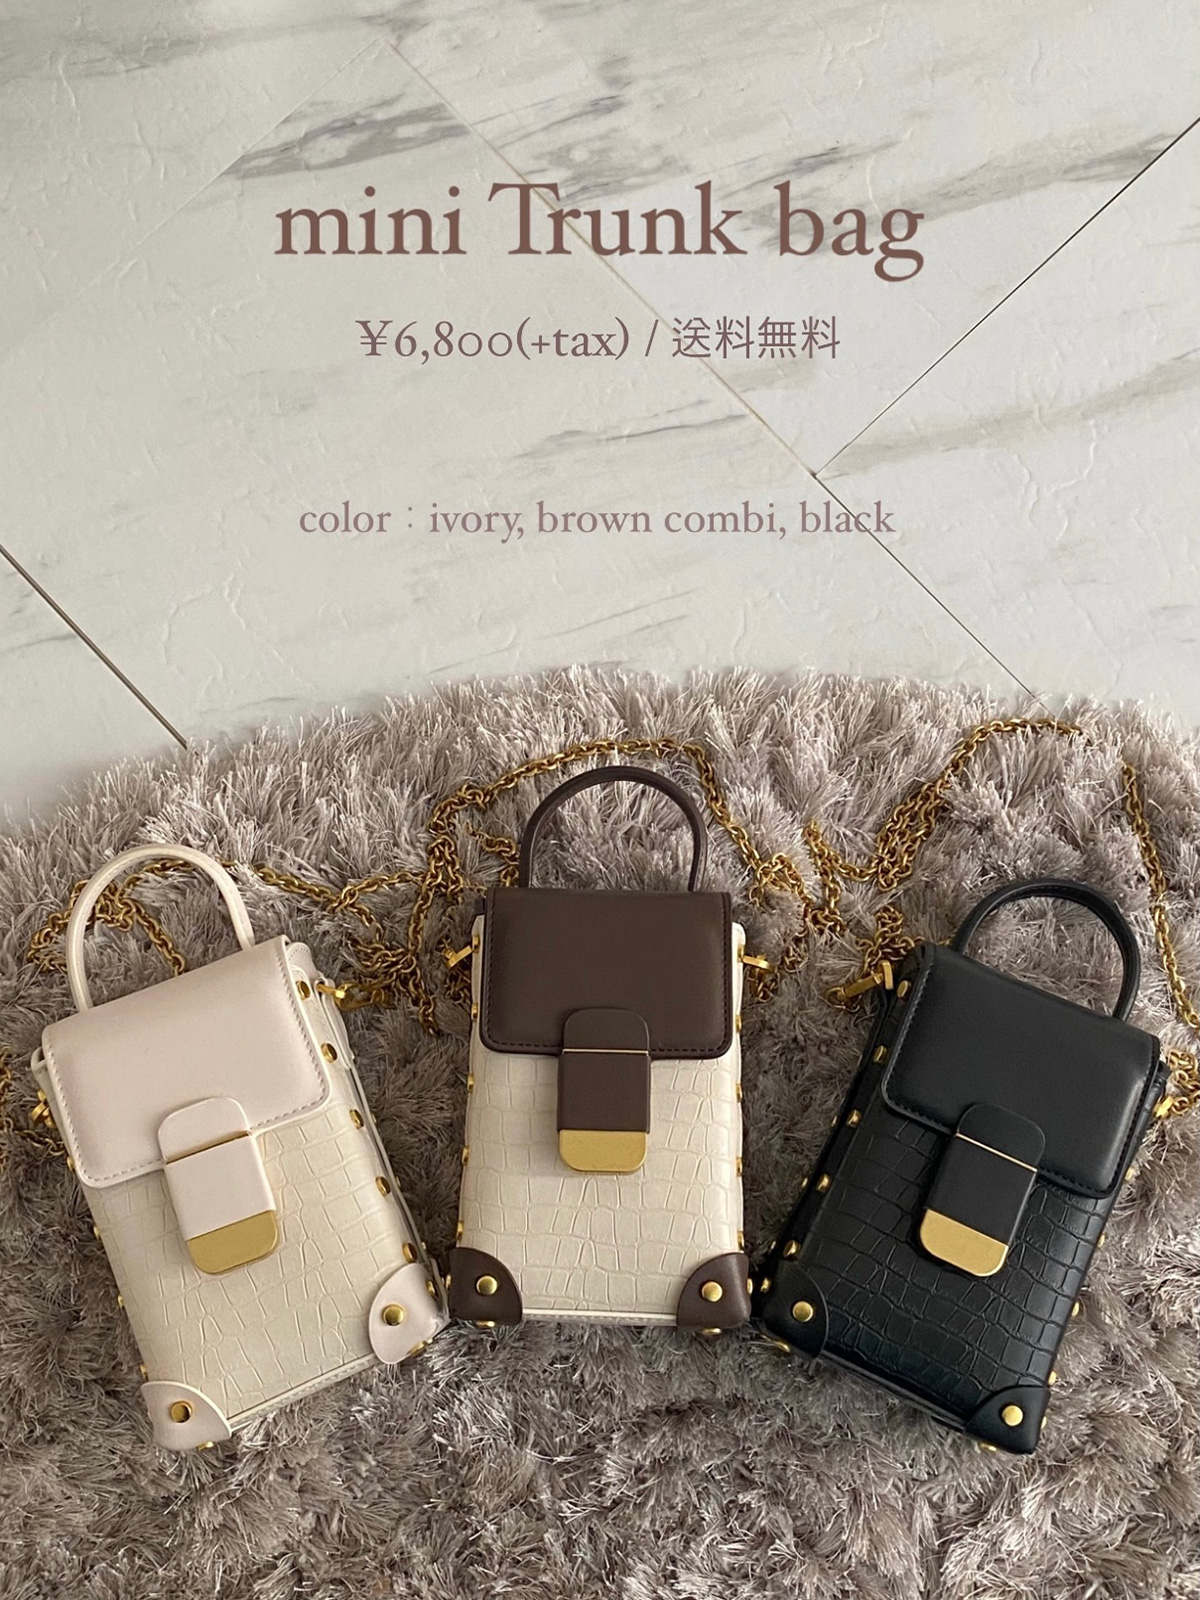  mini trunk bag 